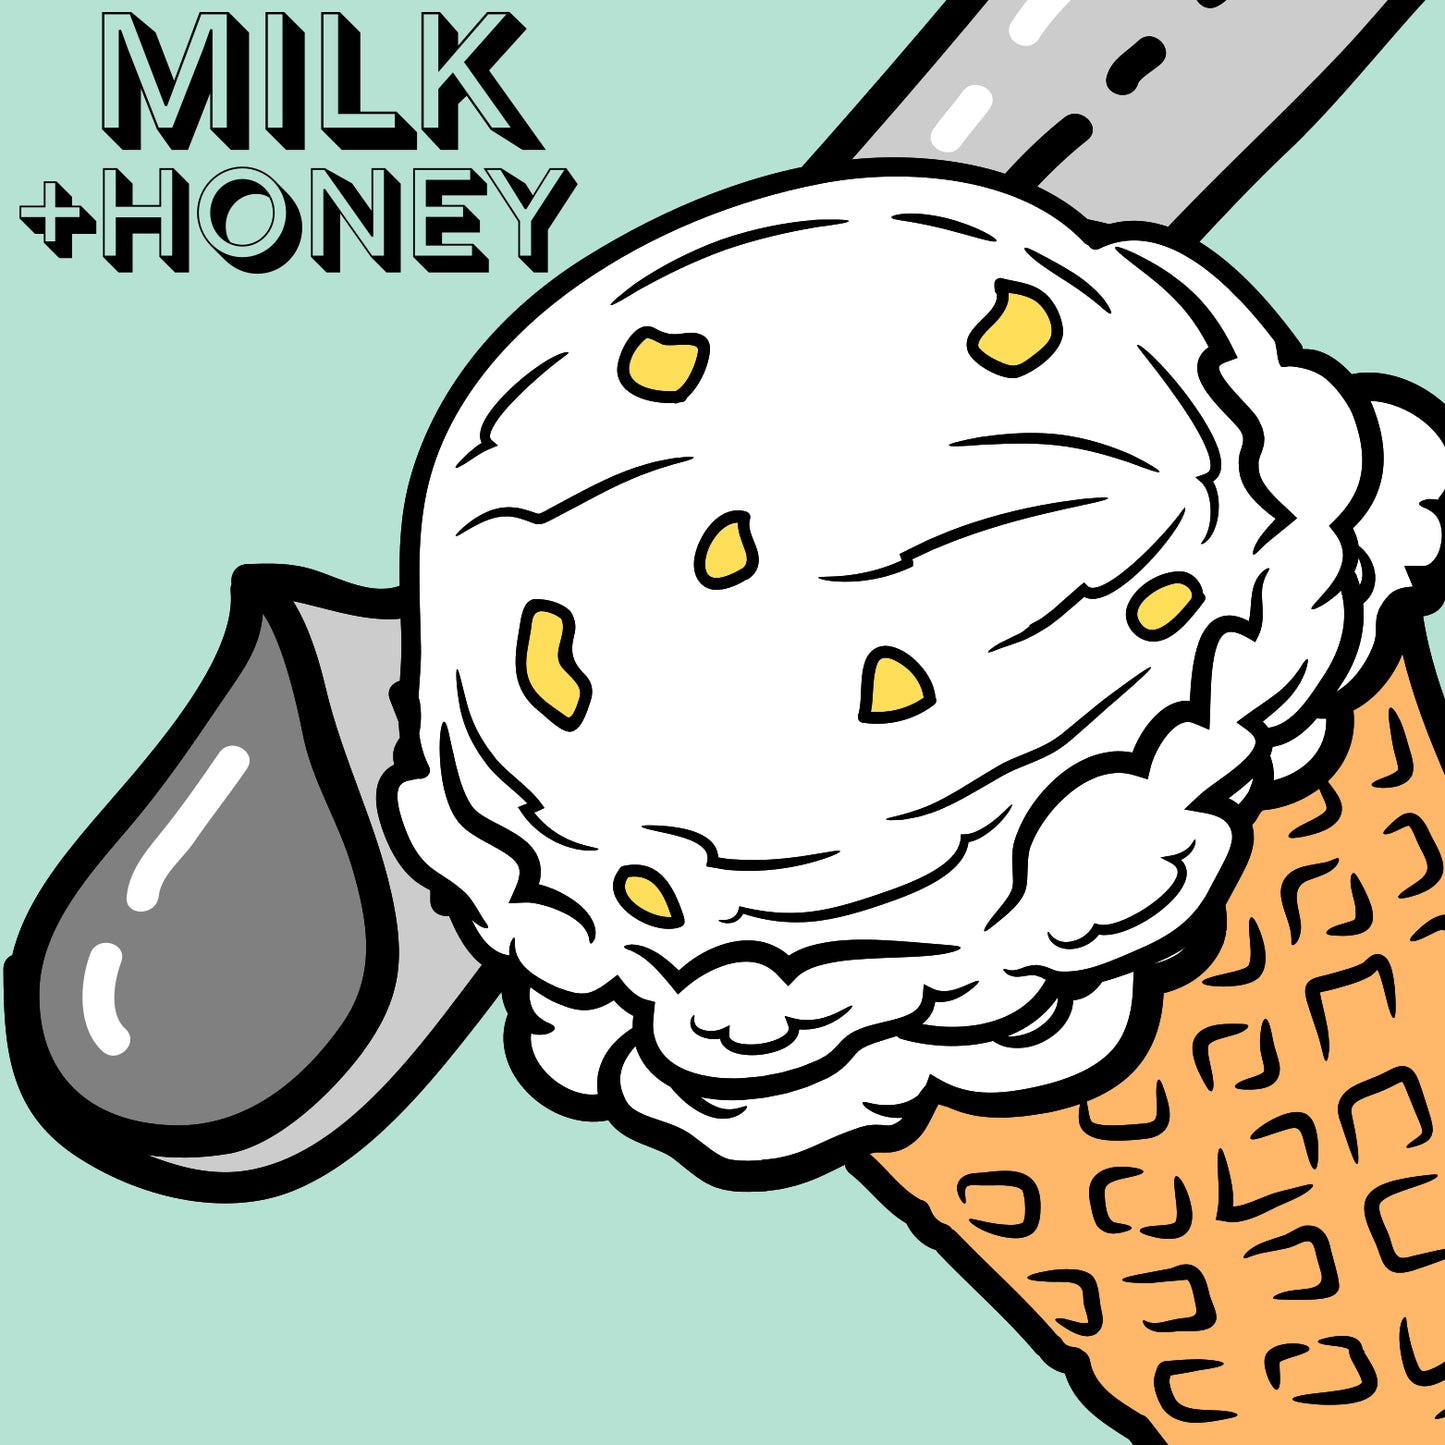 Milk + Honey Ice Cream